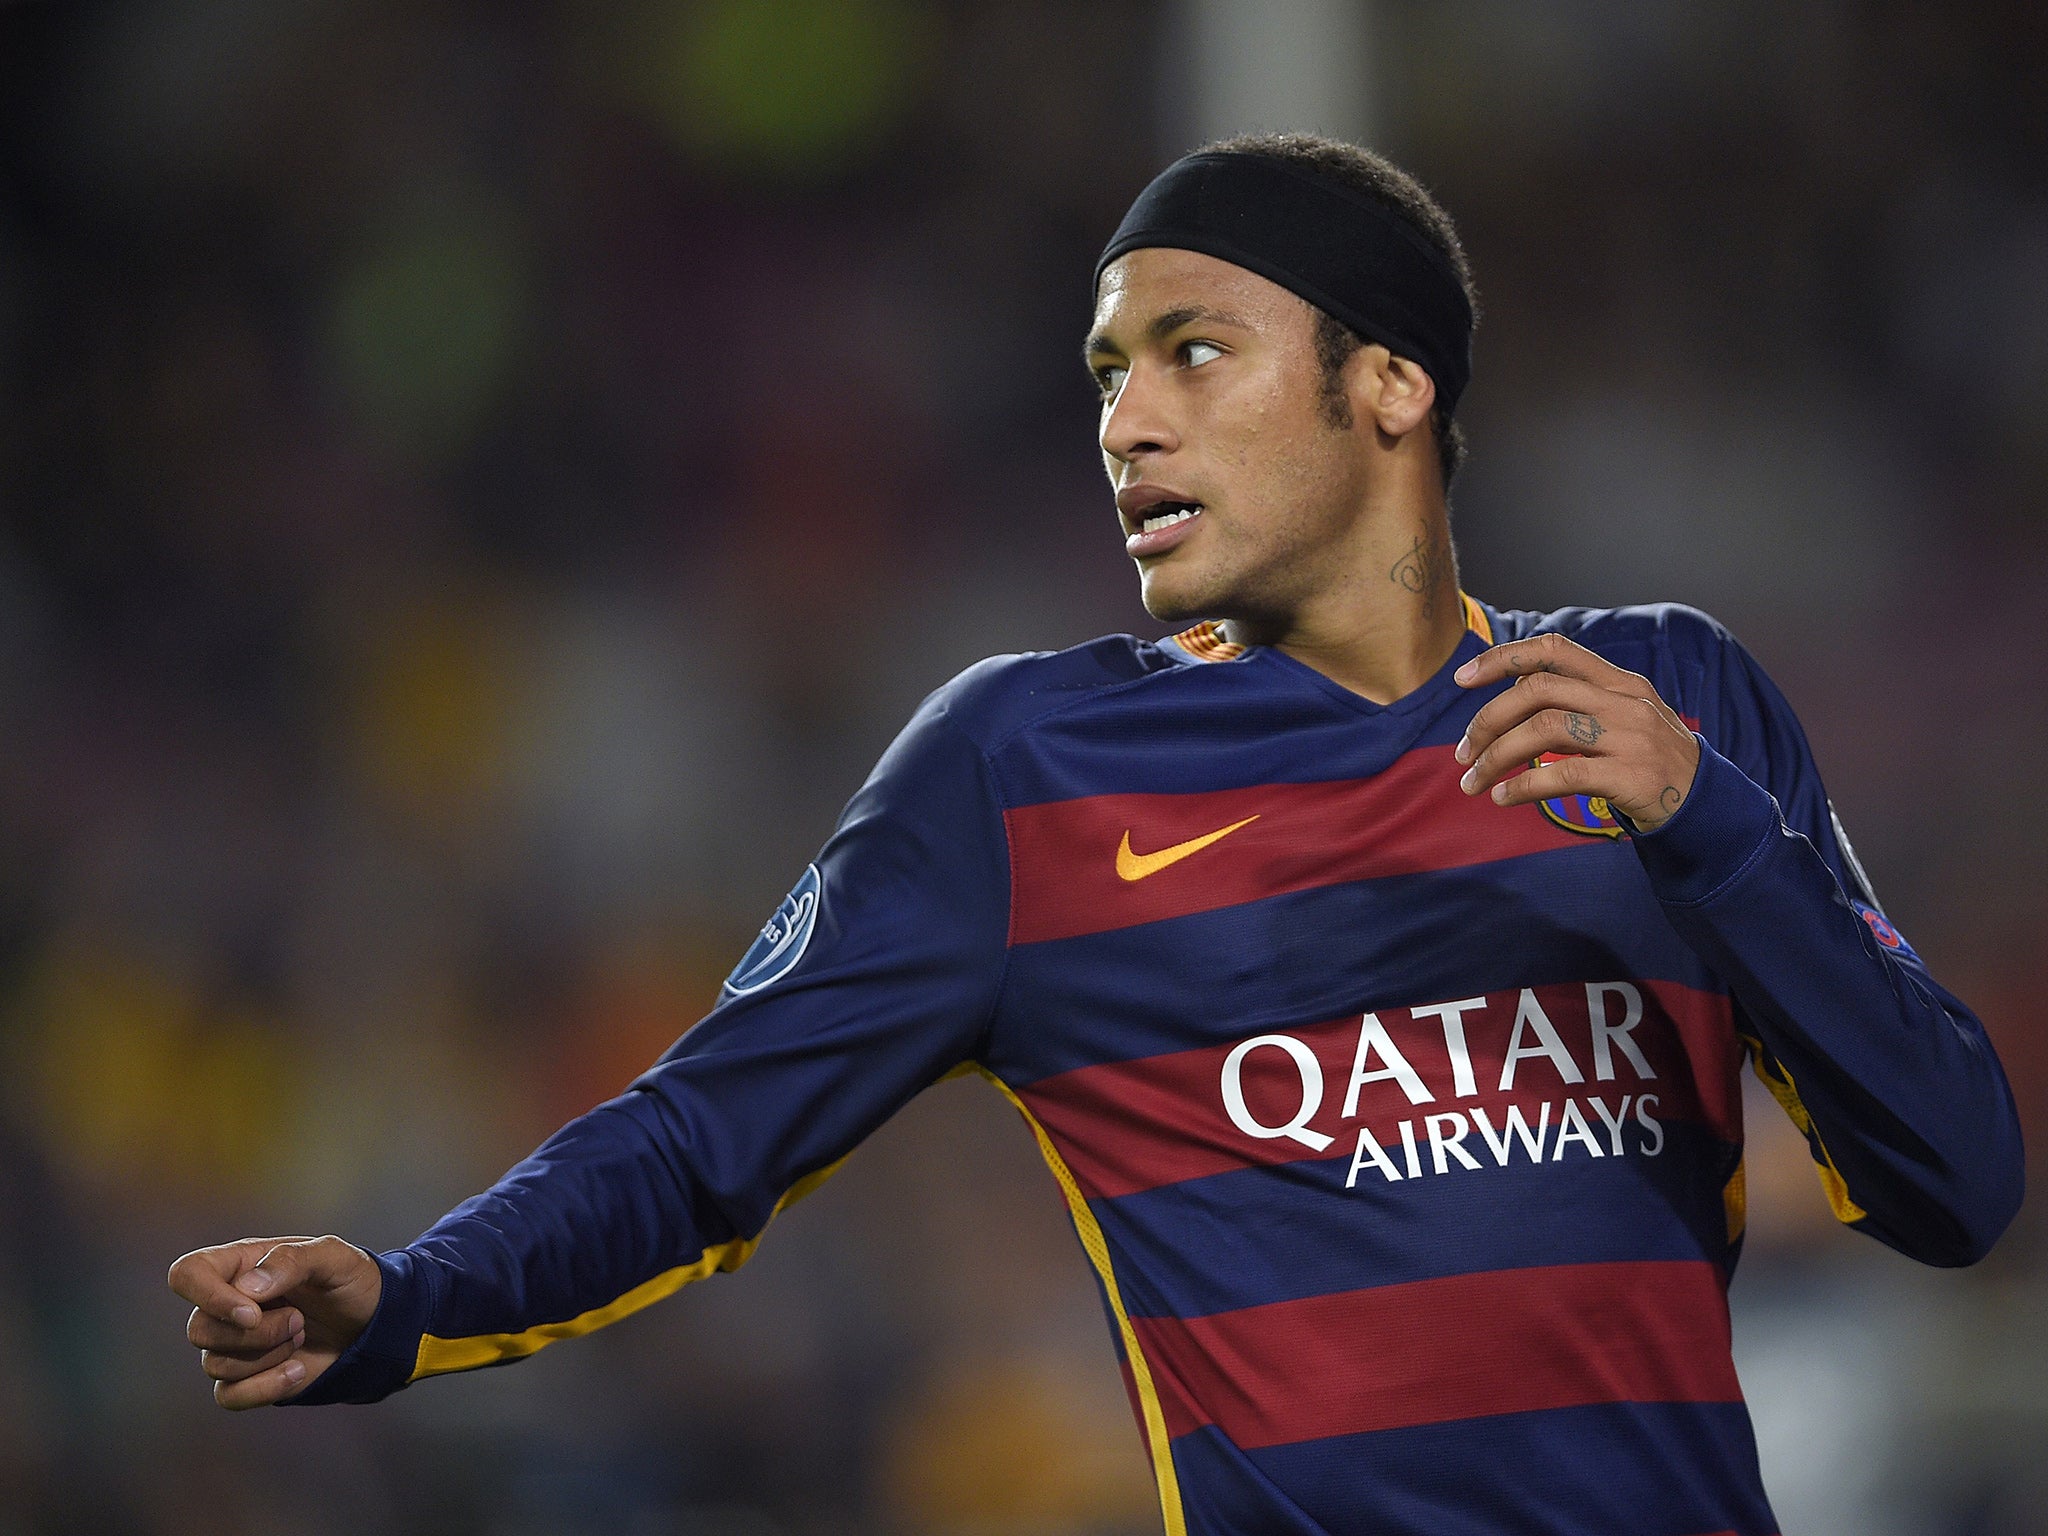 Barcelona forward Neymar